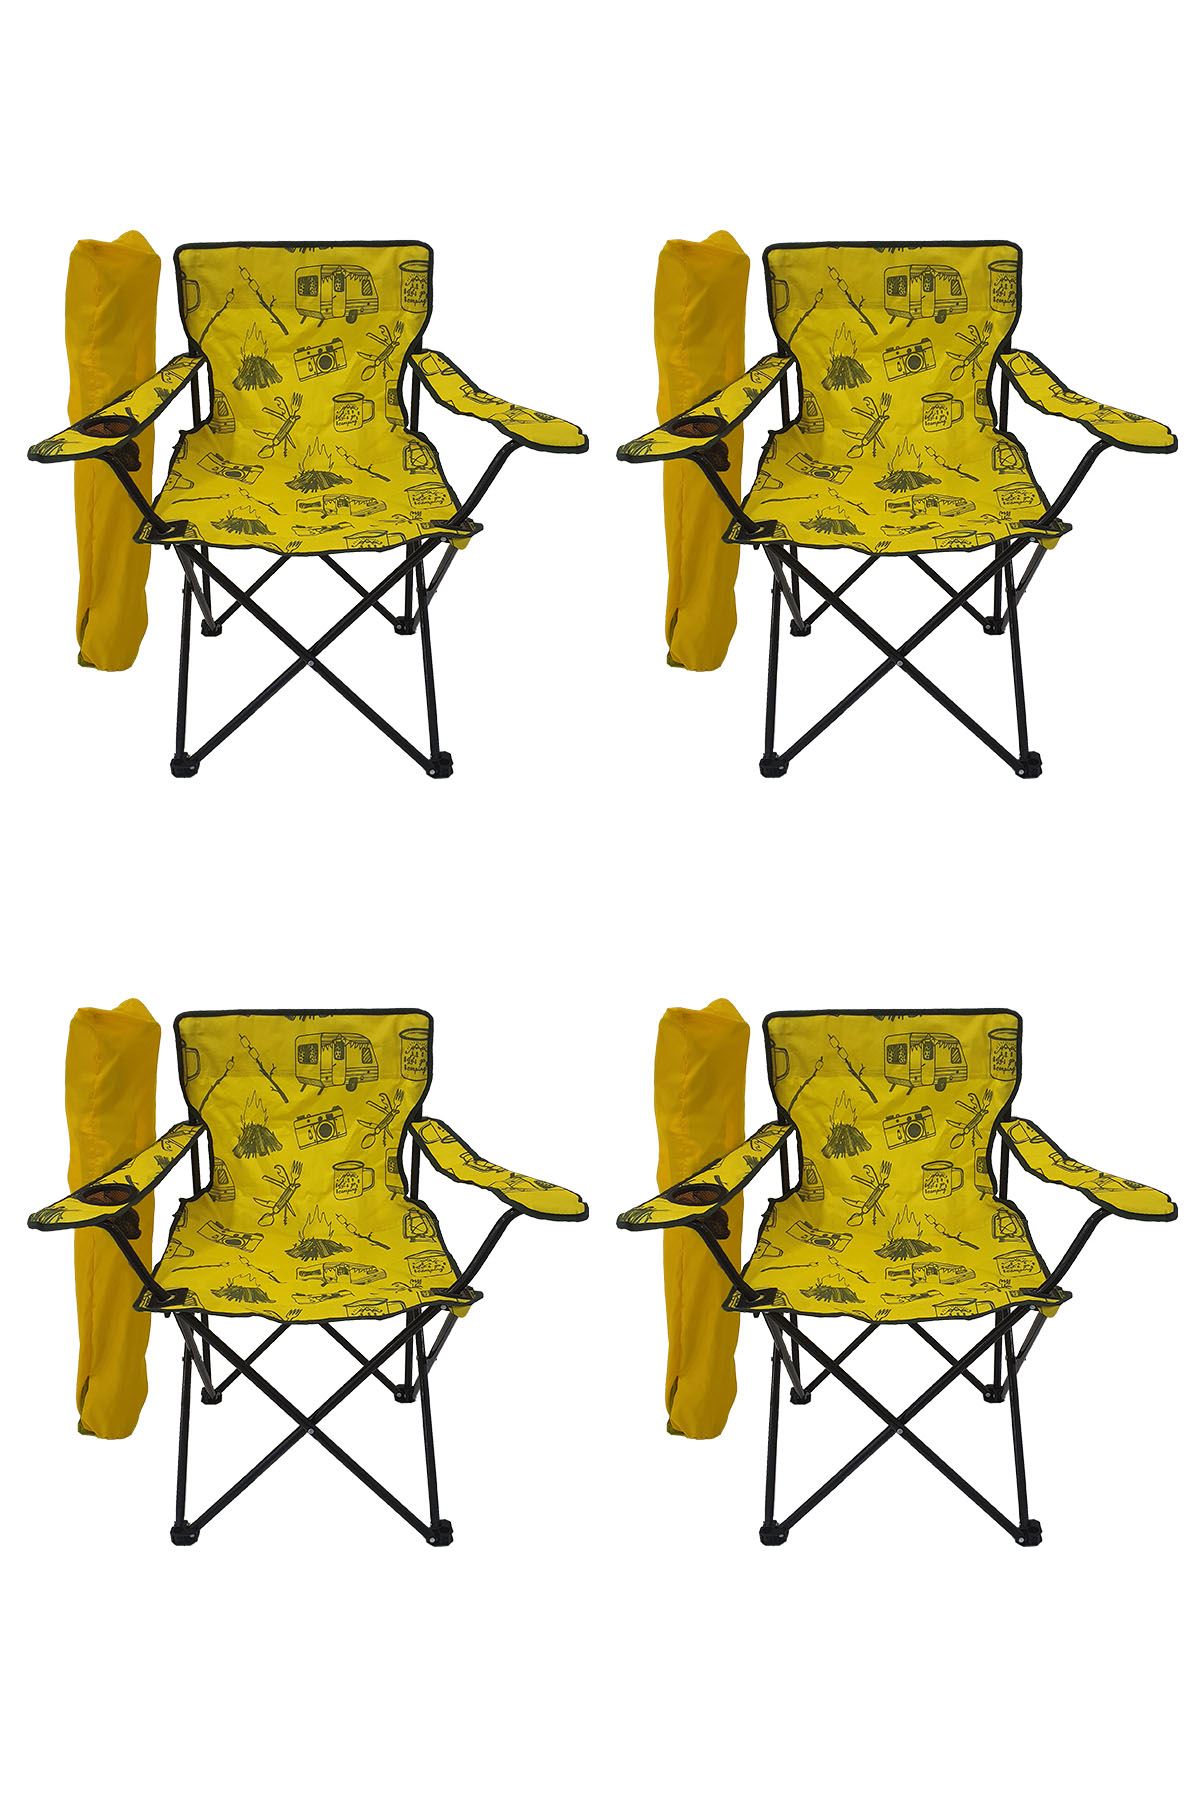 Bofigo 4 Pcs Camping Chair Folding Chair Garden Chair Picnic Beach Chair Patterned Yellow